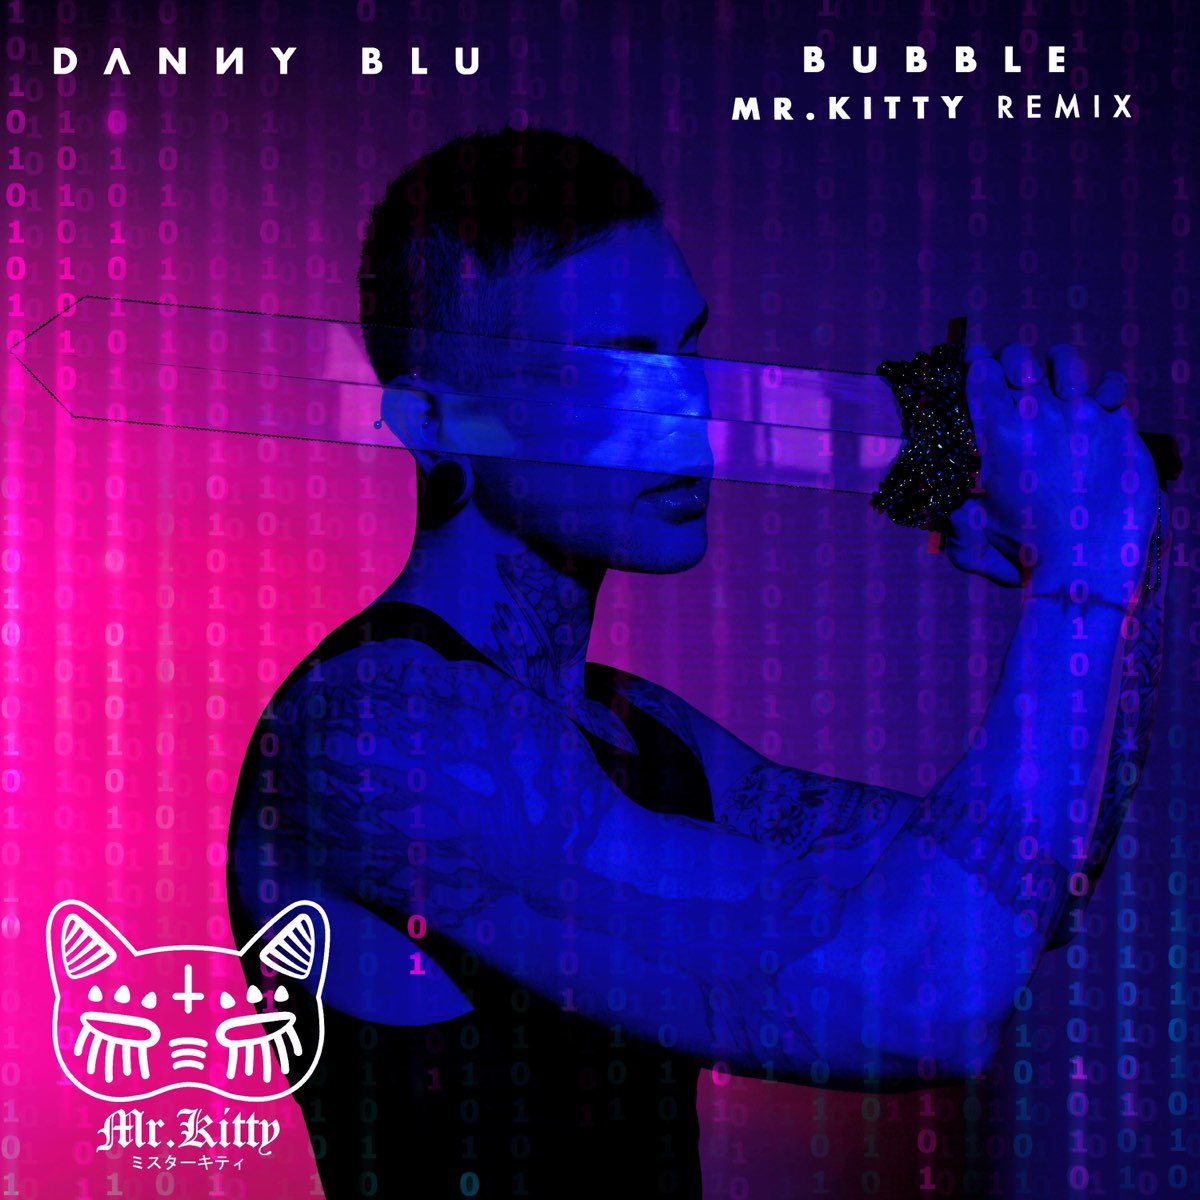 Bubble (Mr.Kitty Remix), Danny Blu, Mr.Kitty